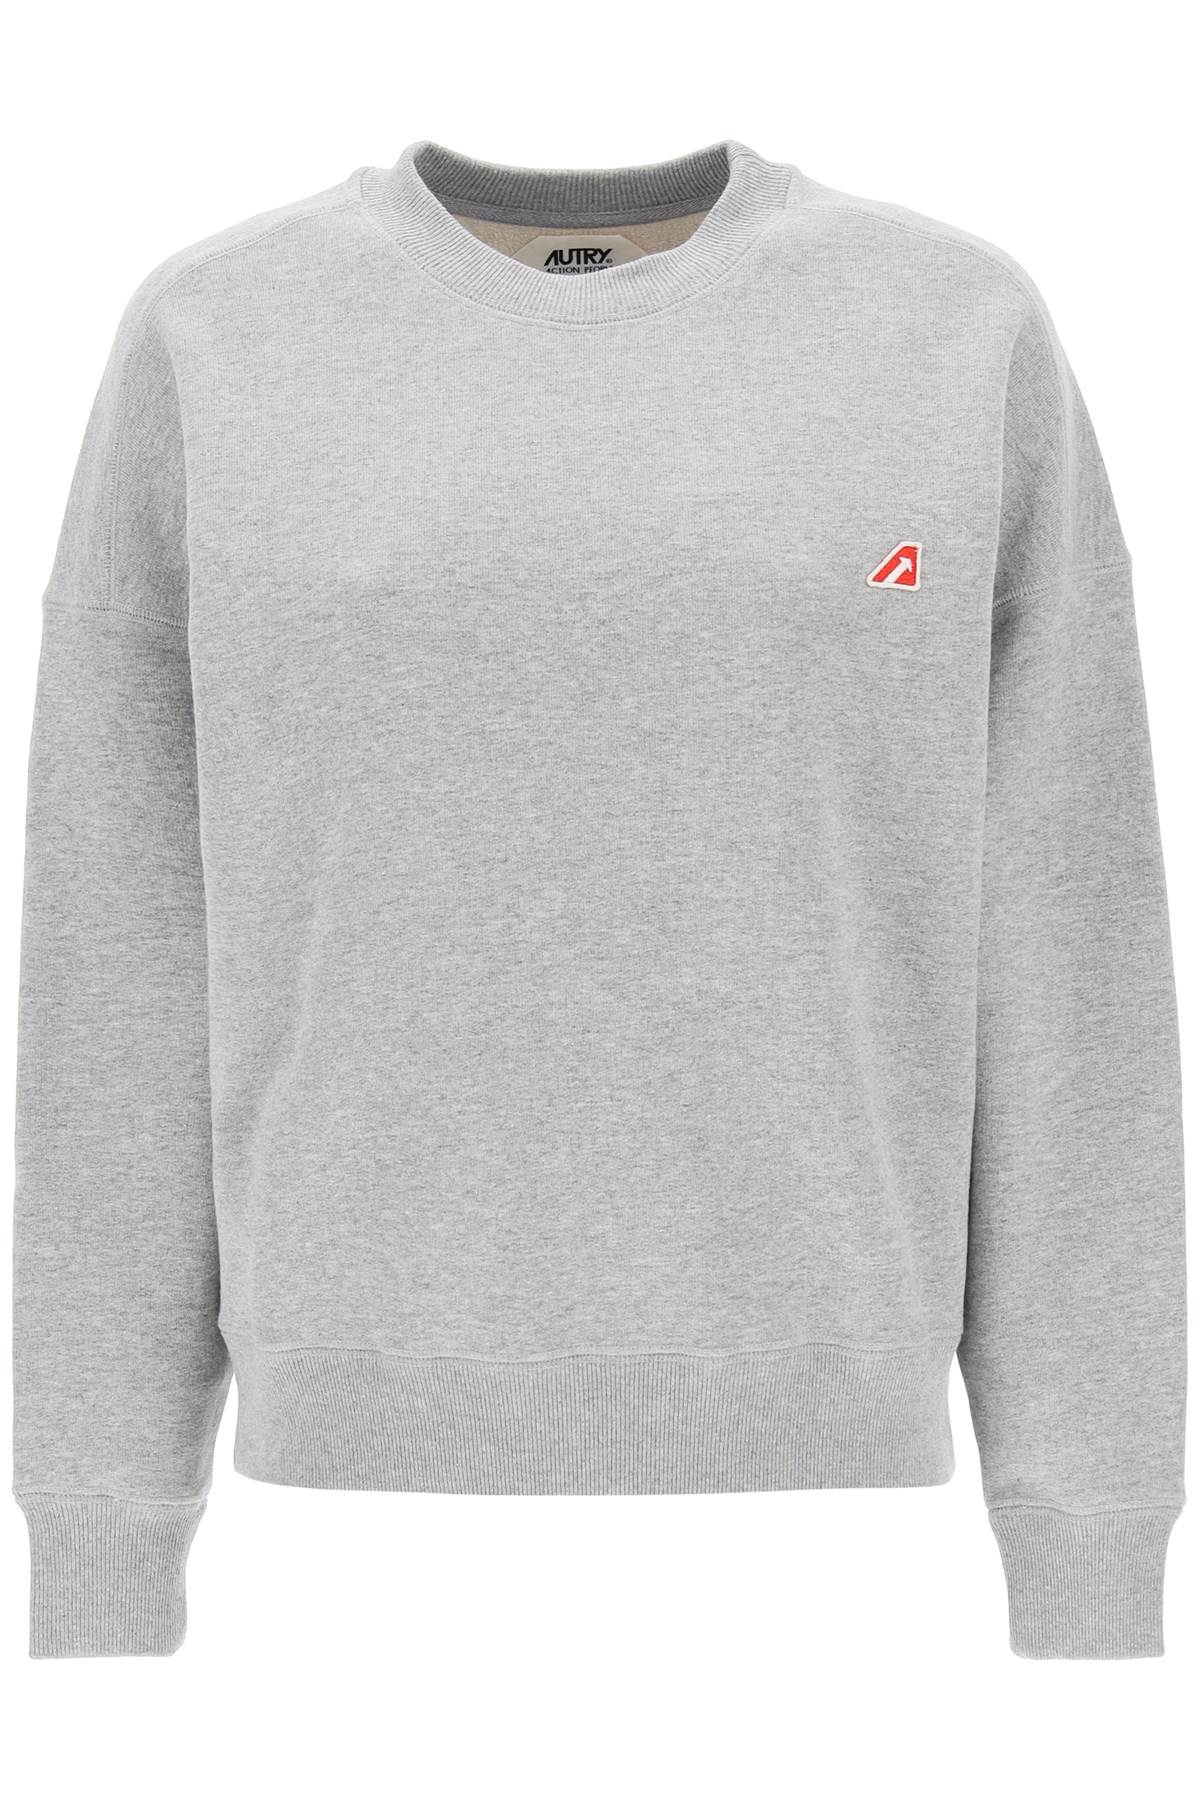 Autry crew-neck sweatshirt with logo patch SWEW417E EASY GR